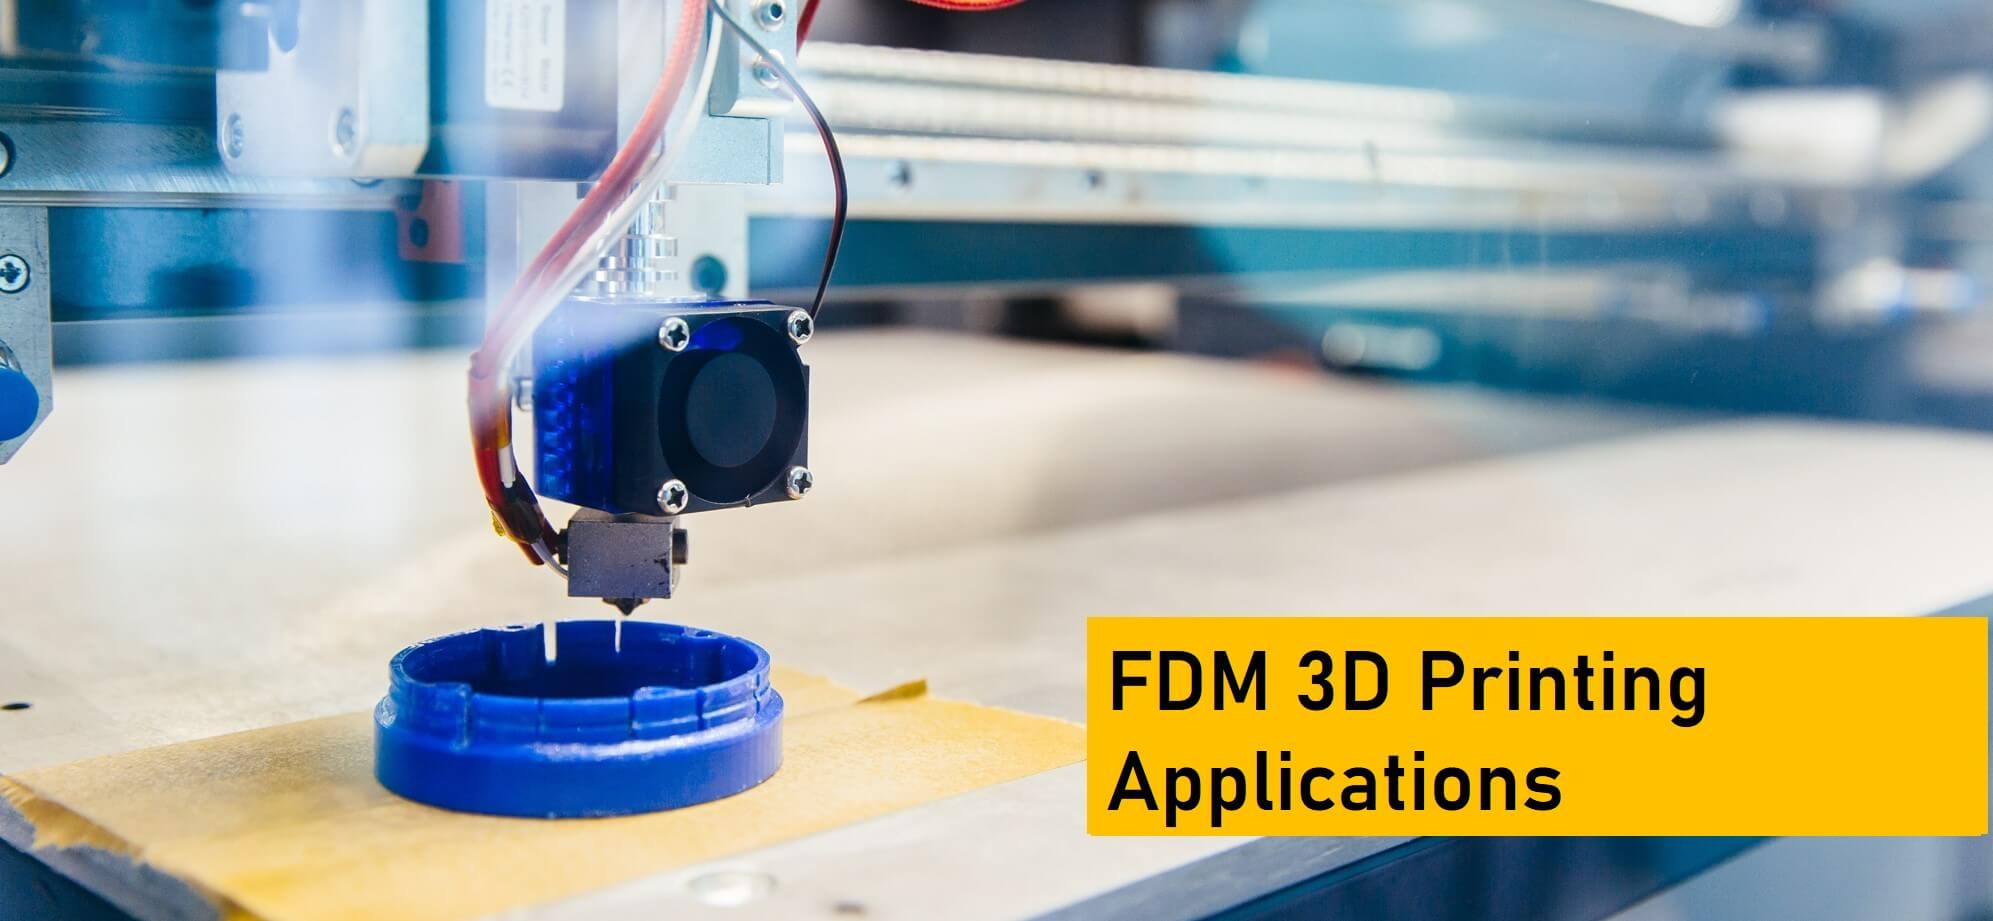 FDM 3D Printing Applications